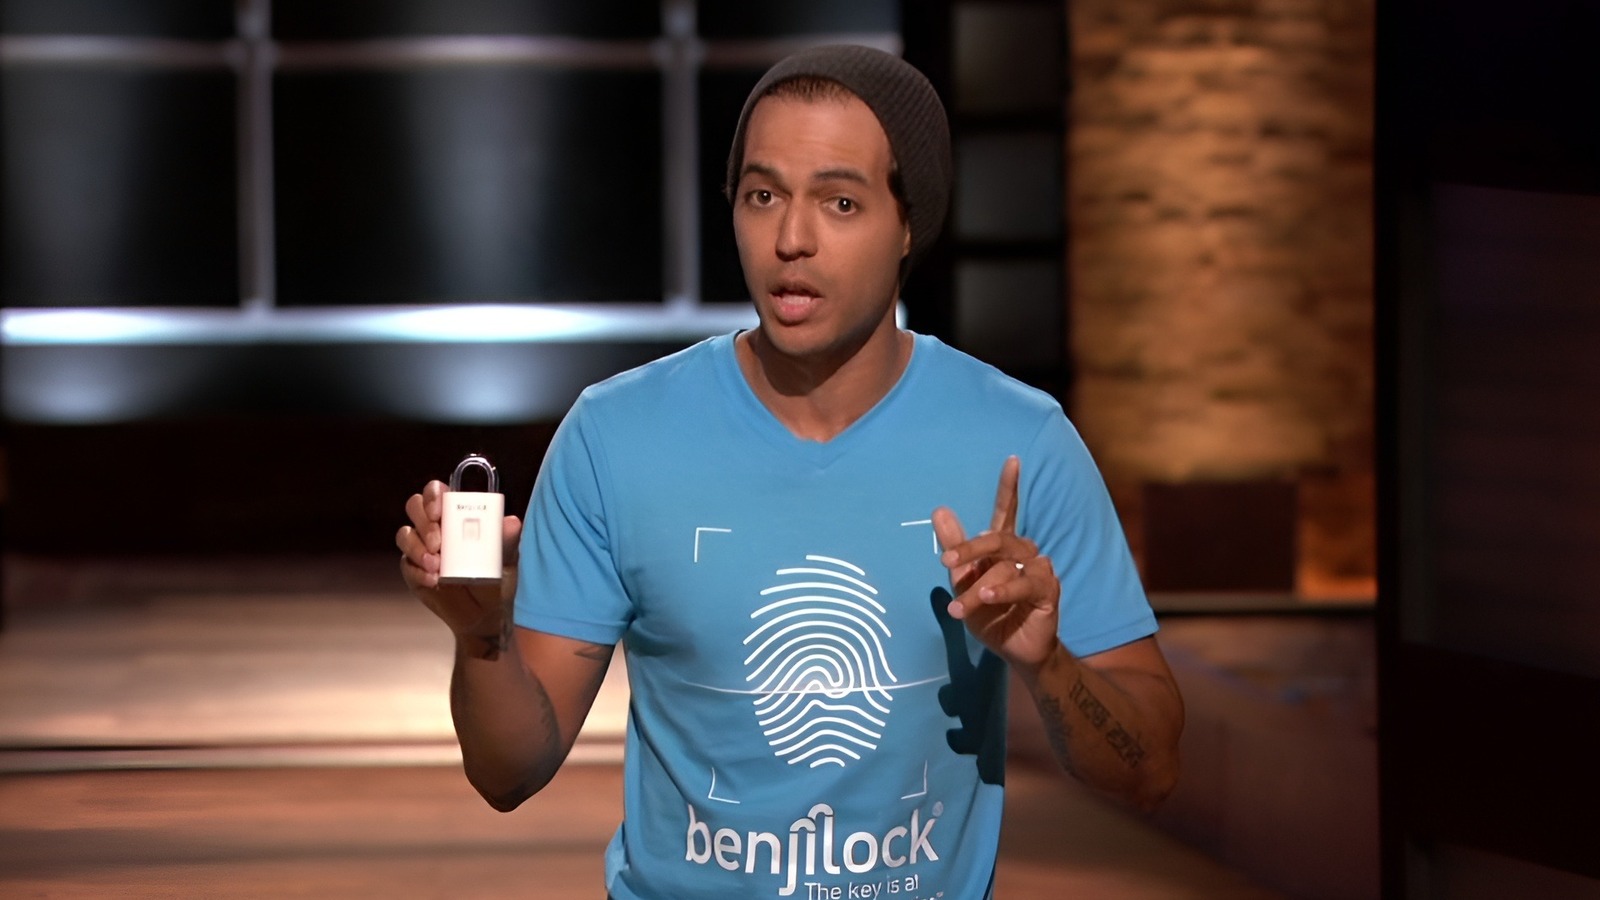 LA inventor creates BenjiLock to revolutionize lock industry with